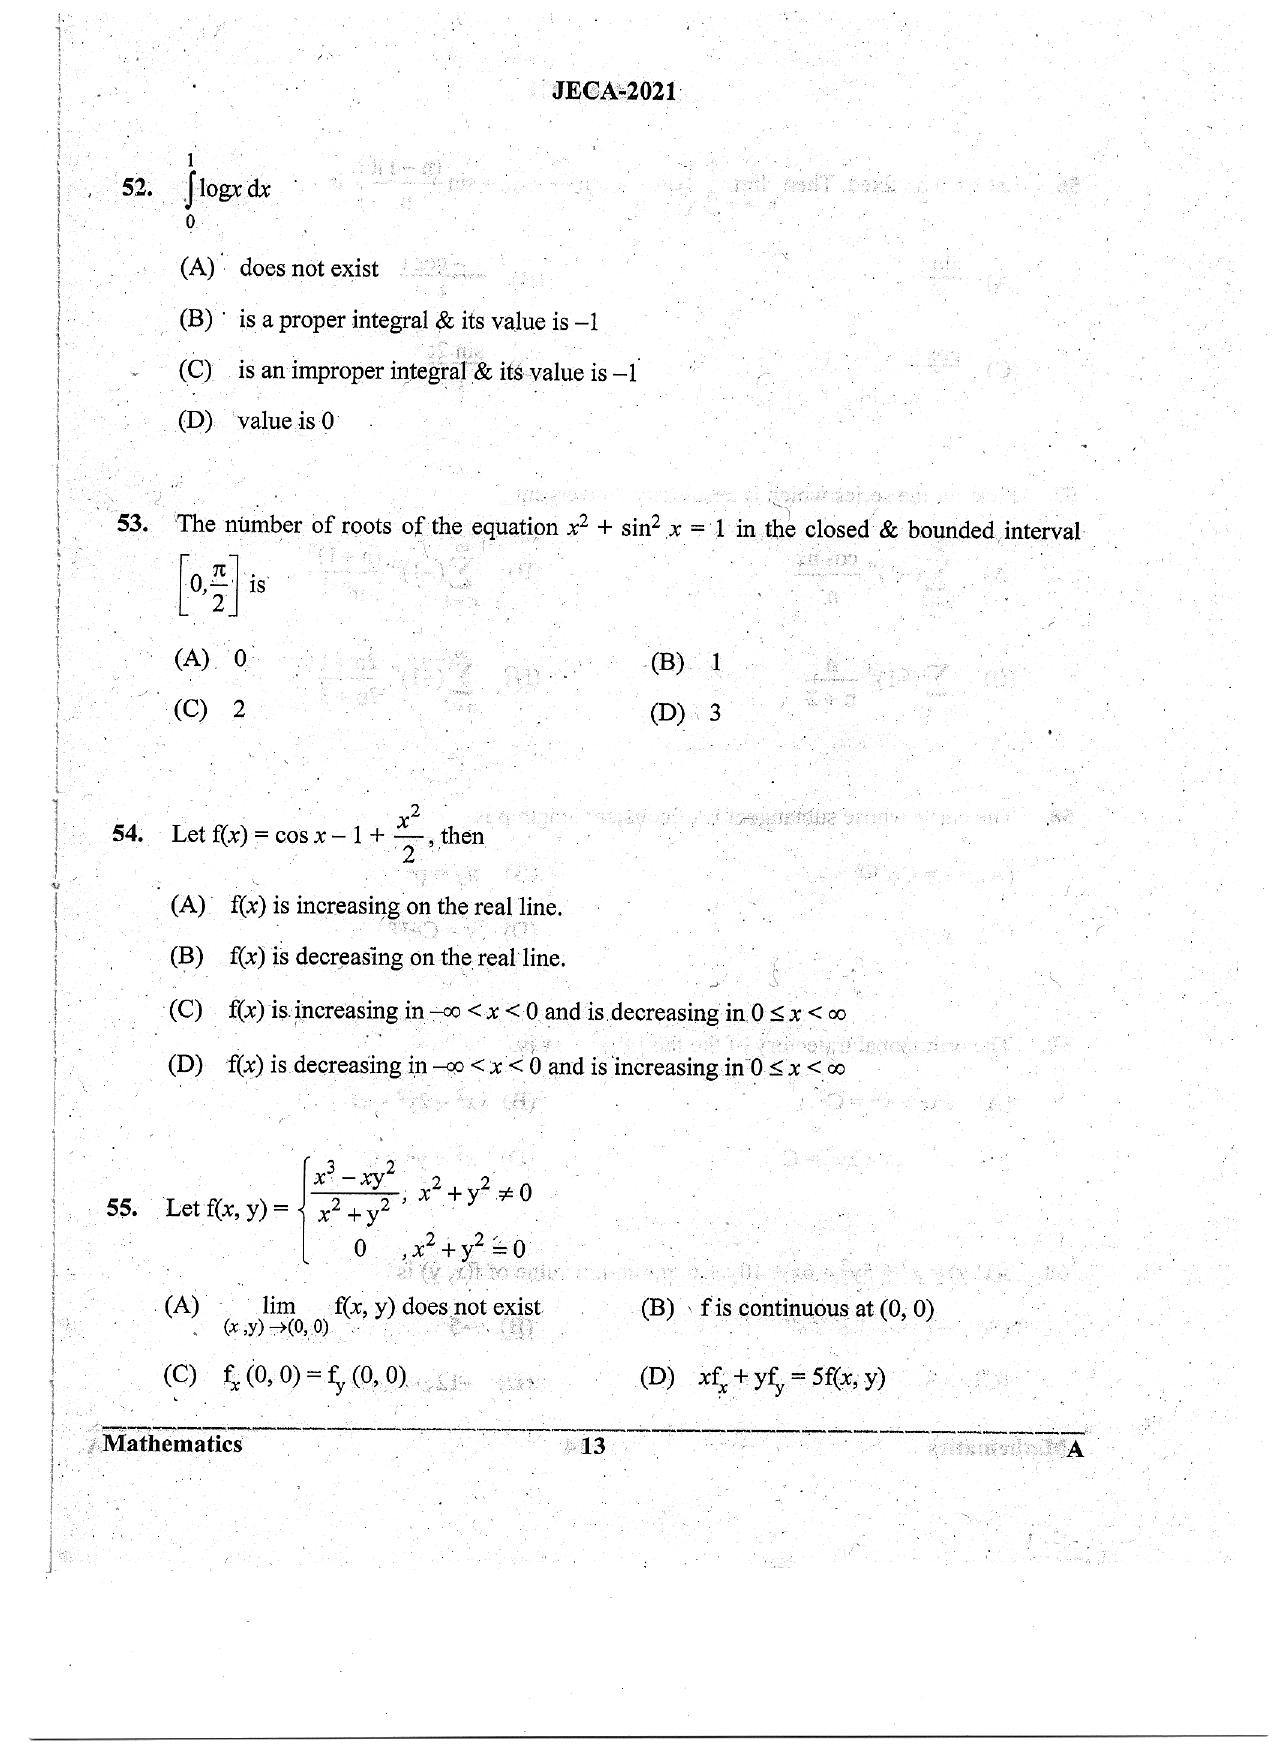 WB JECA 2021 Mathematics Question Paper - Page 13